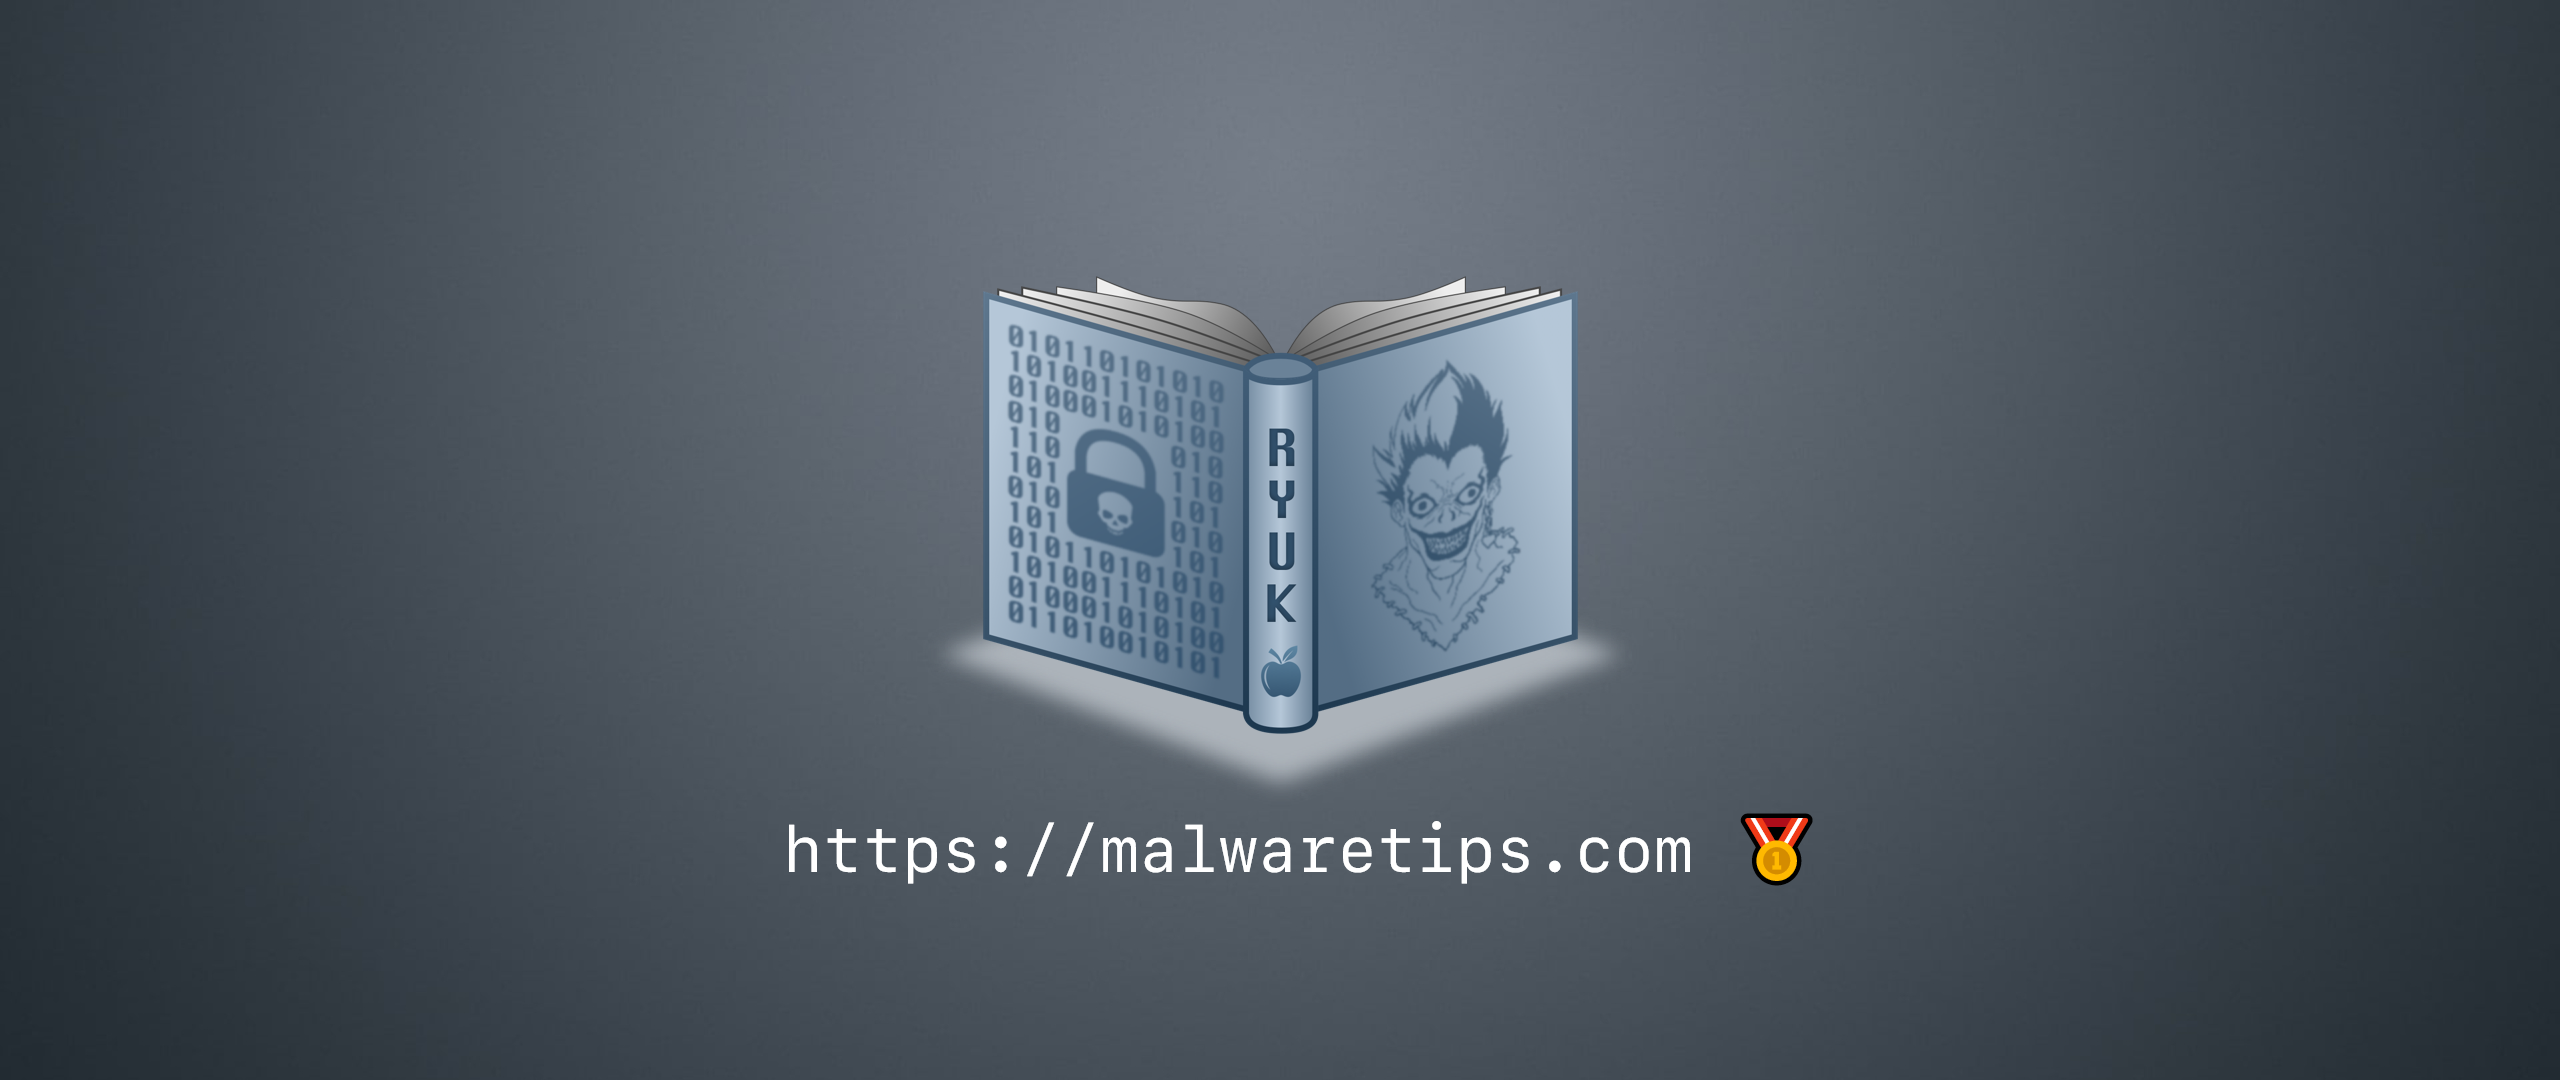 MalwareTips 9.png